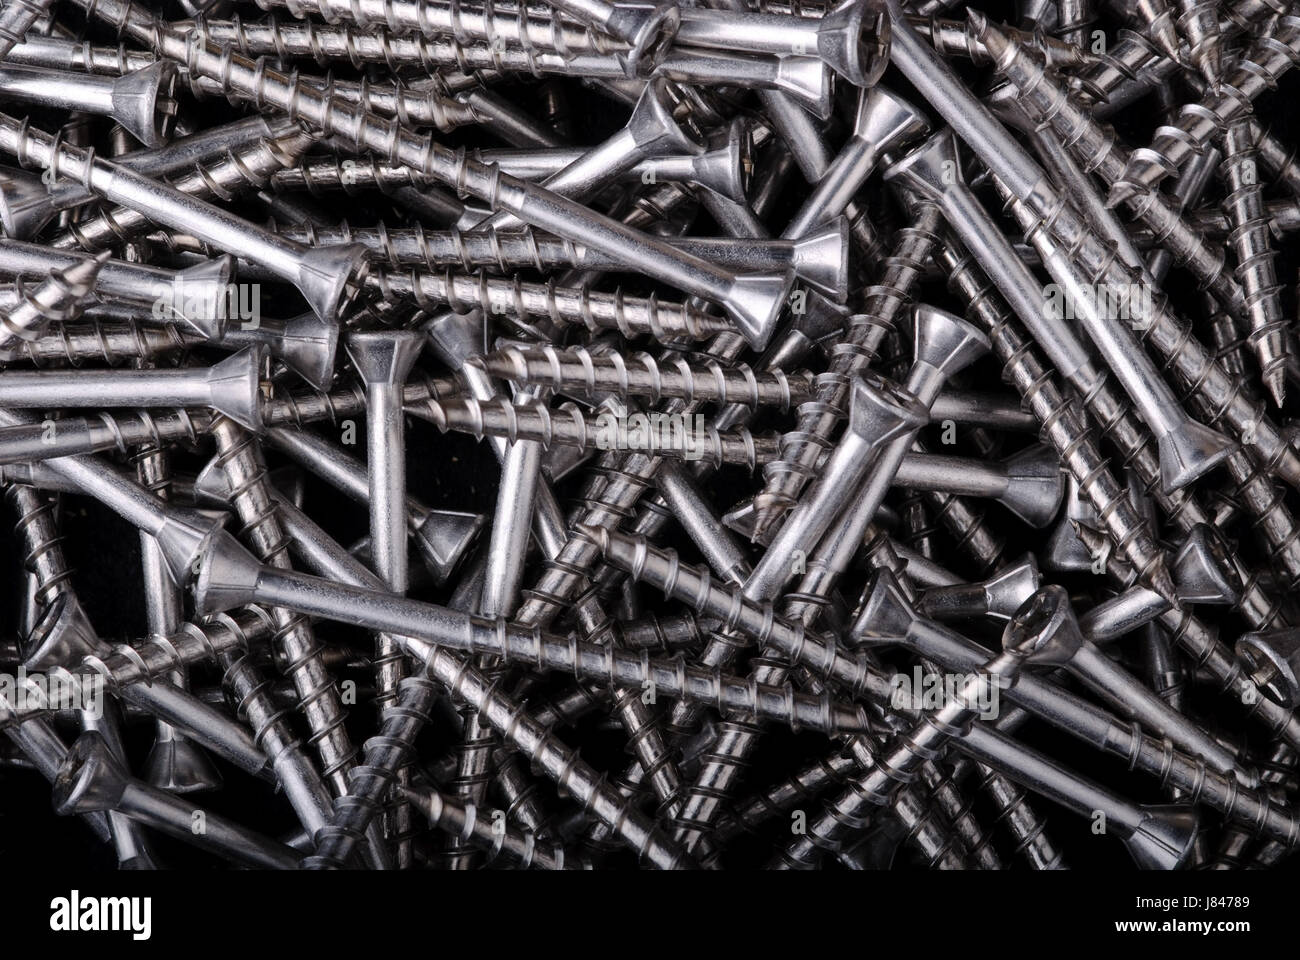 silver screws steel metal pivots bolt textured backdrop background construction Stock Photo